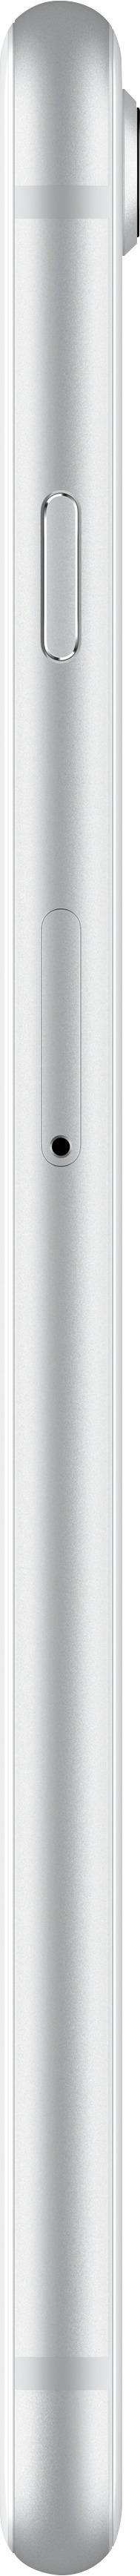 Apple iPhone 8 Plus 64GB Silver (Sprint) MQ8E2LL/A - Best Buy